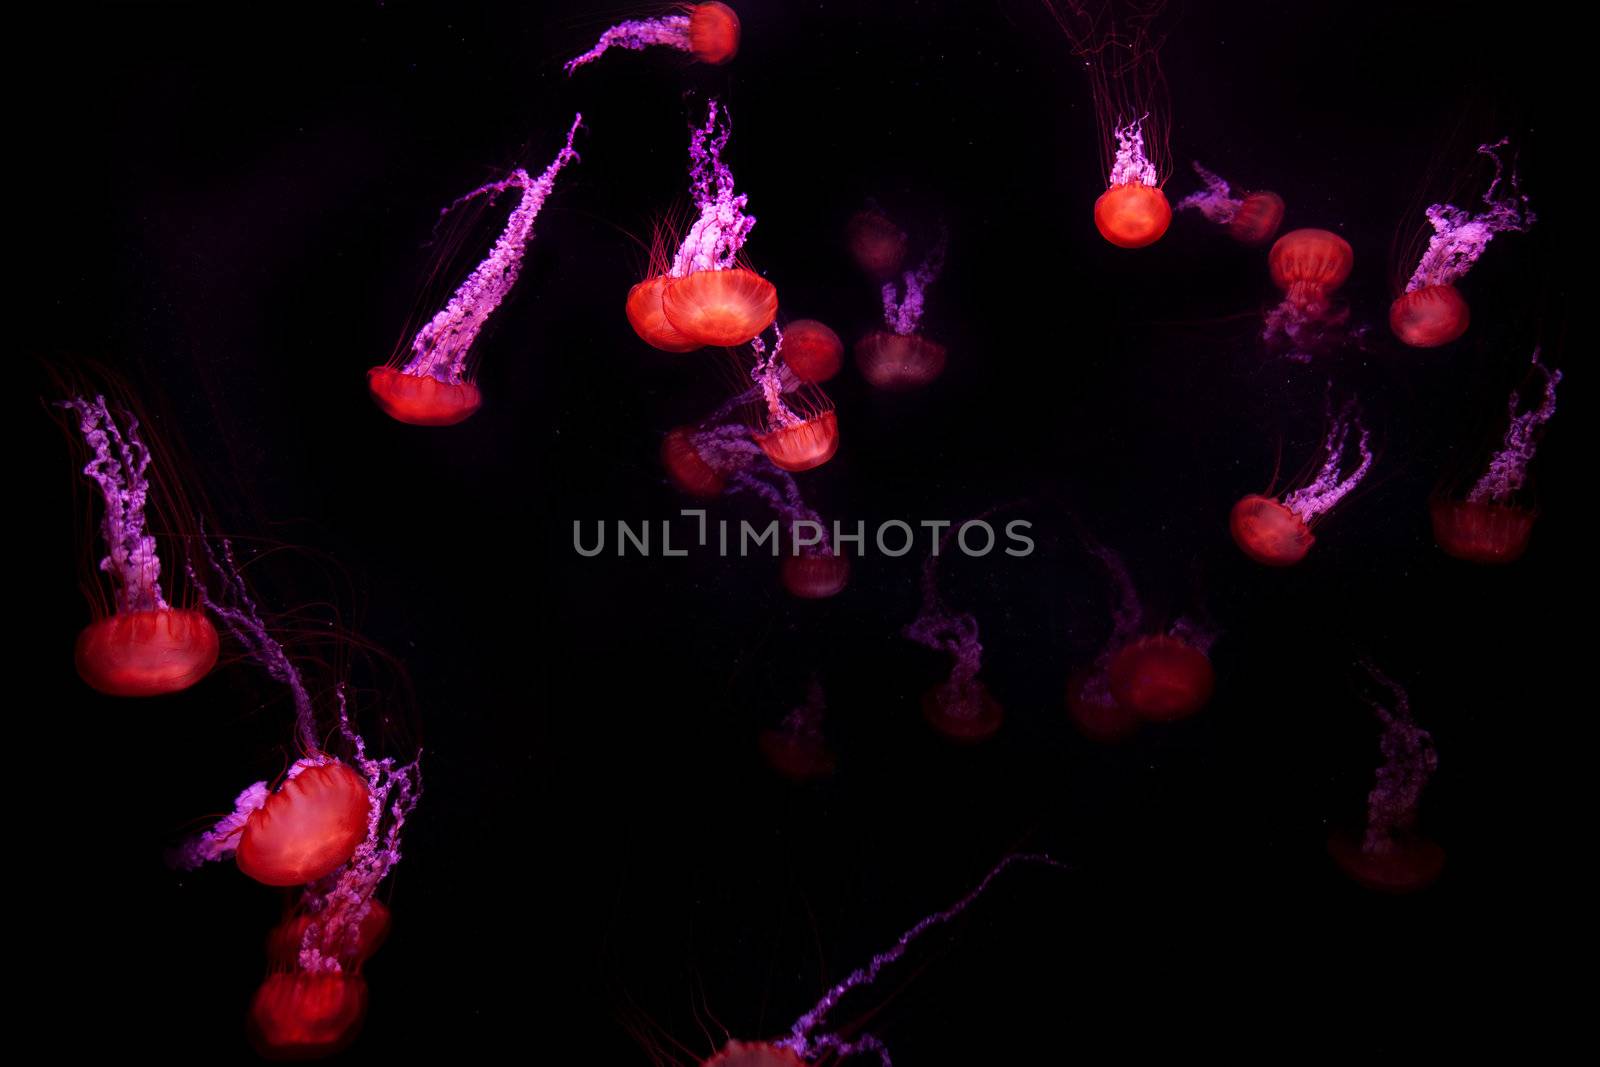 Chrysaora fuscescens. Red jellyfish on black background